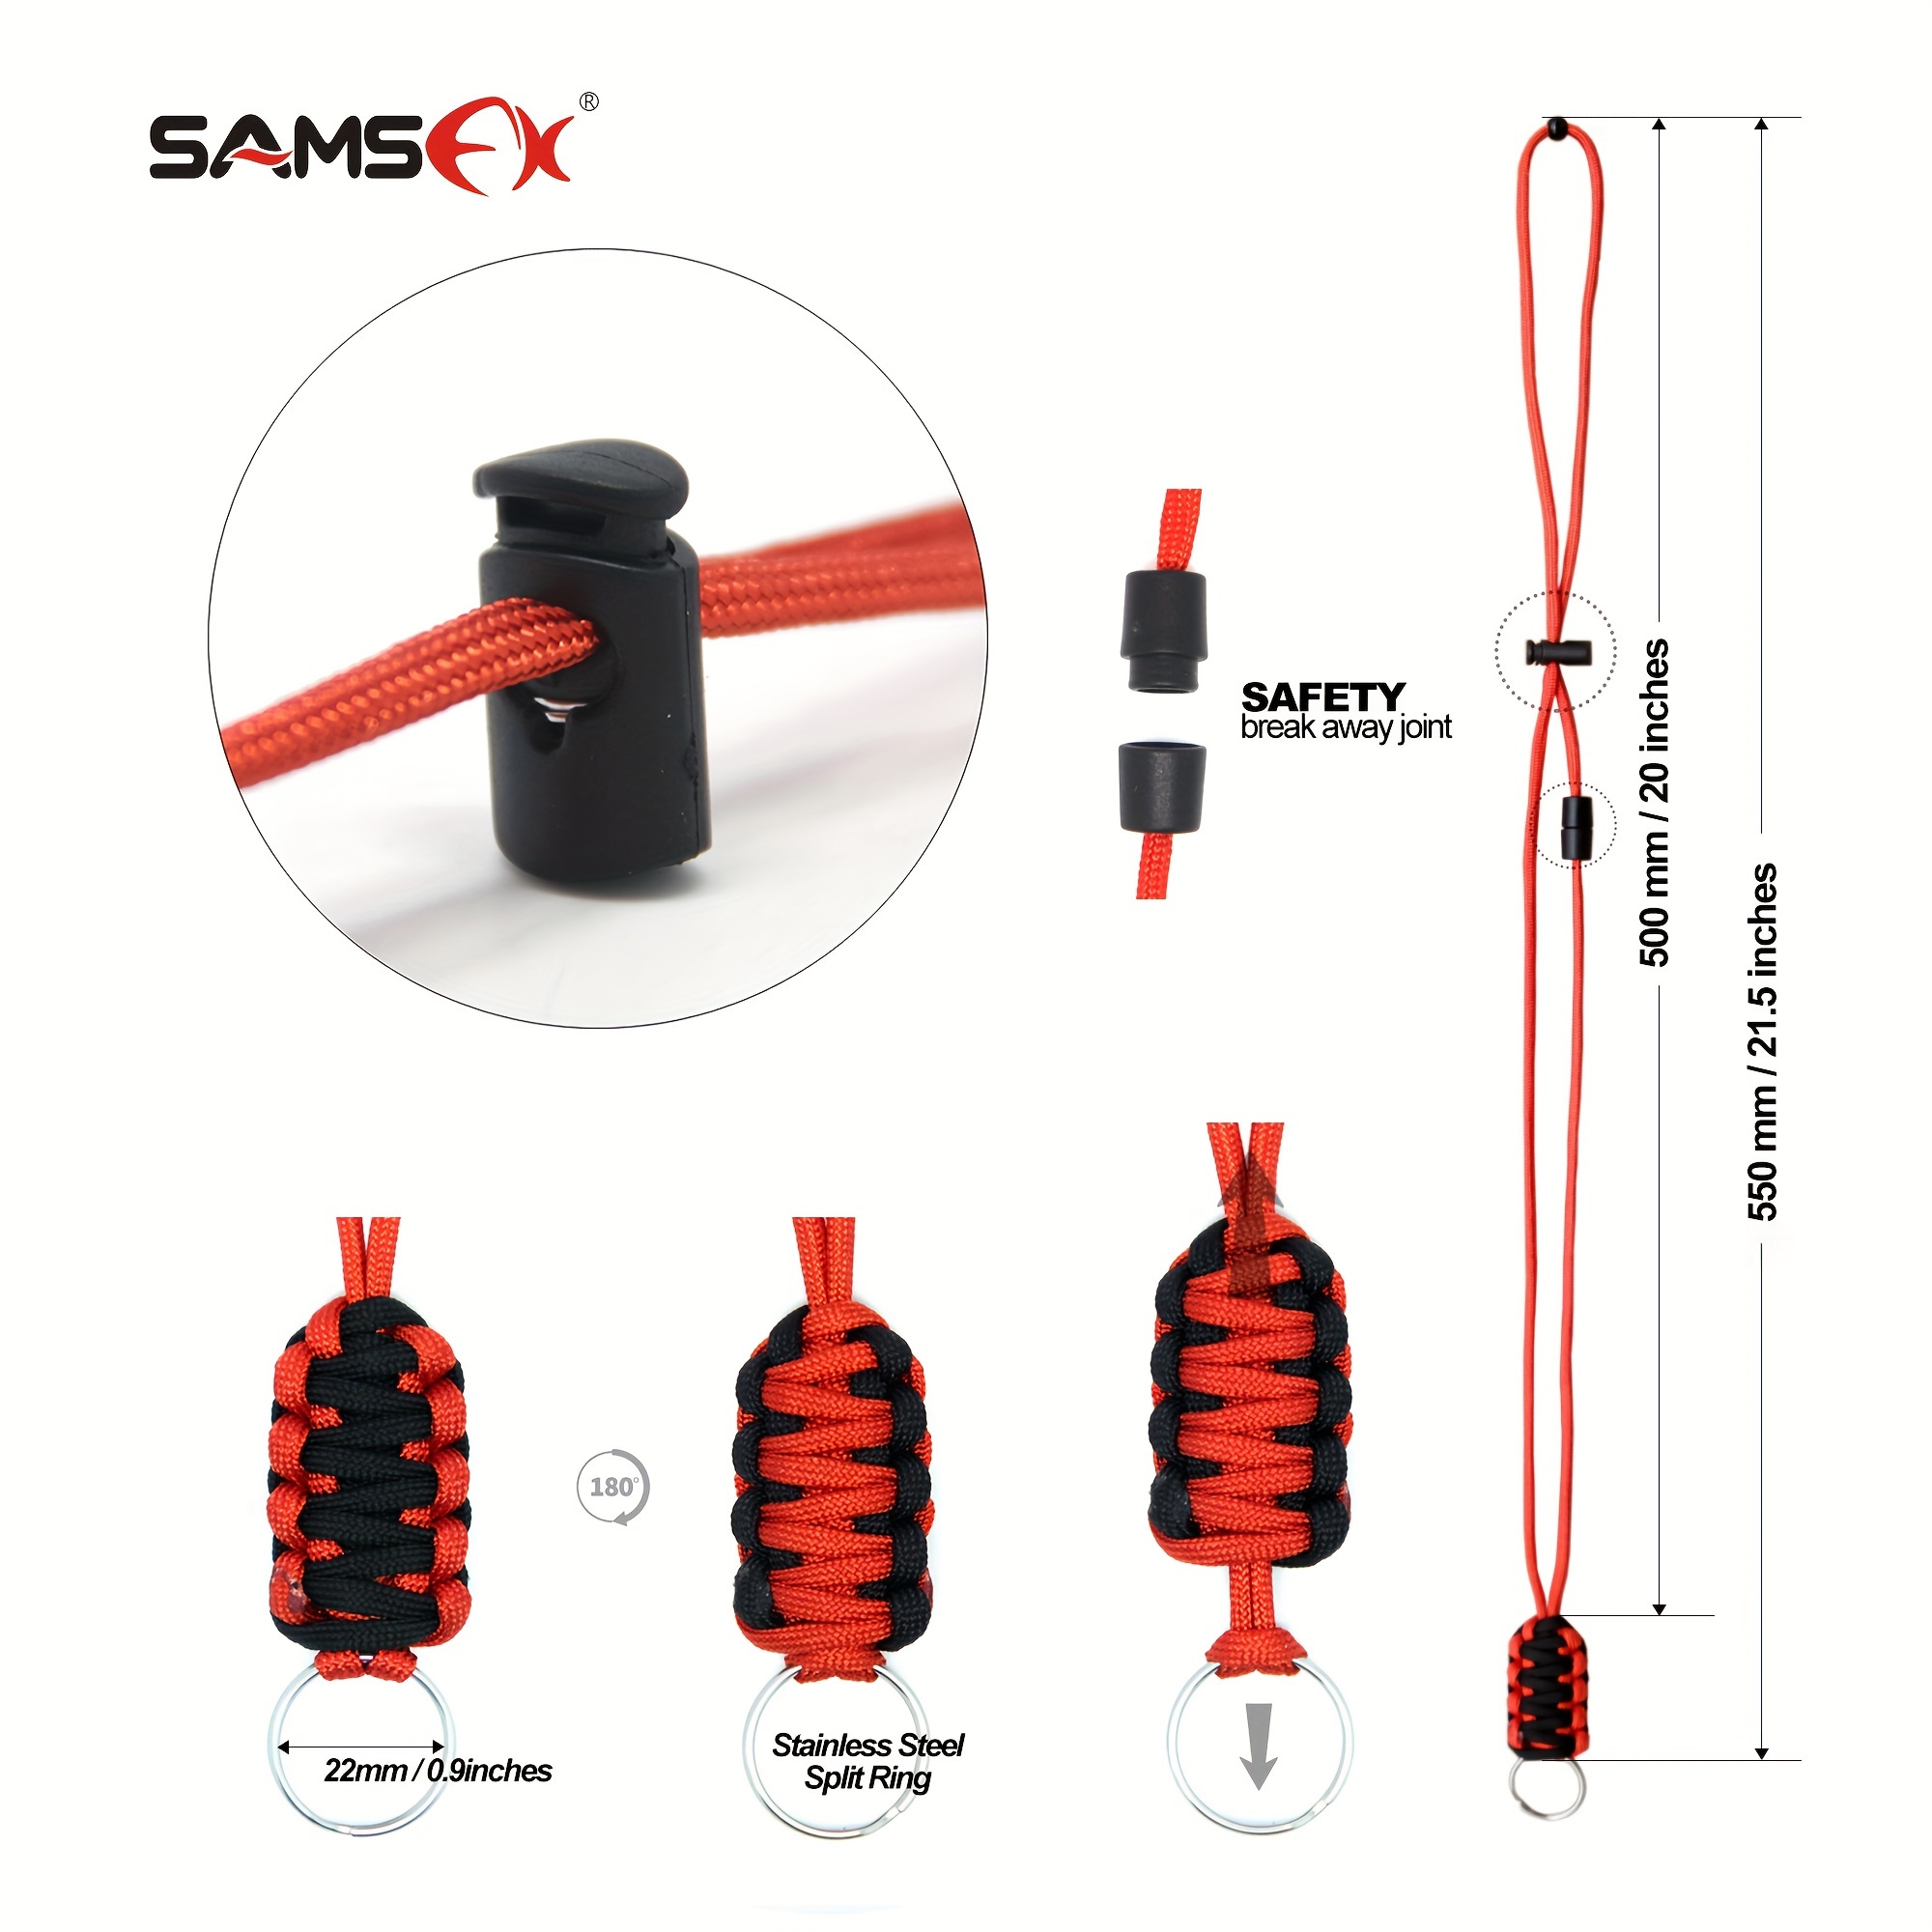 SAMSFX Fishing Pliers Fishing Gear with Rubber Handle, Lanyard